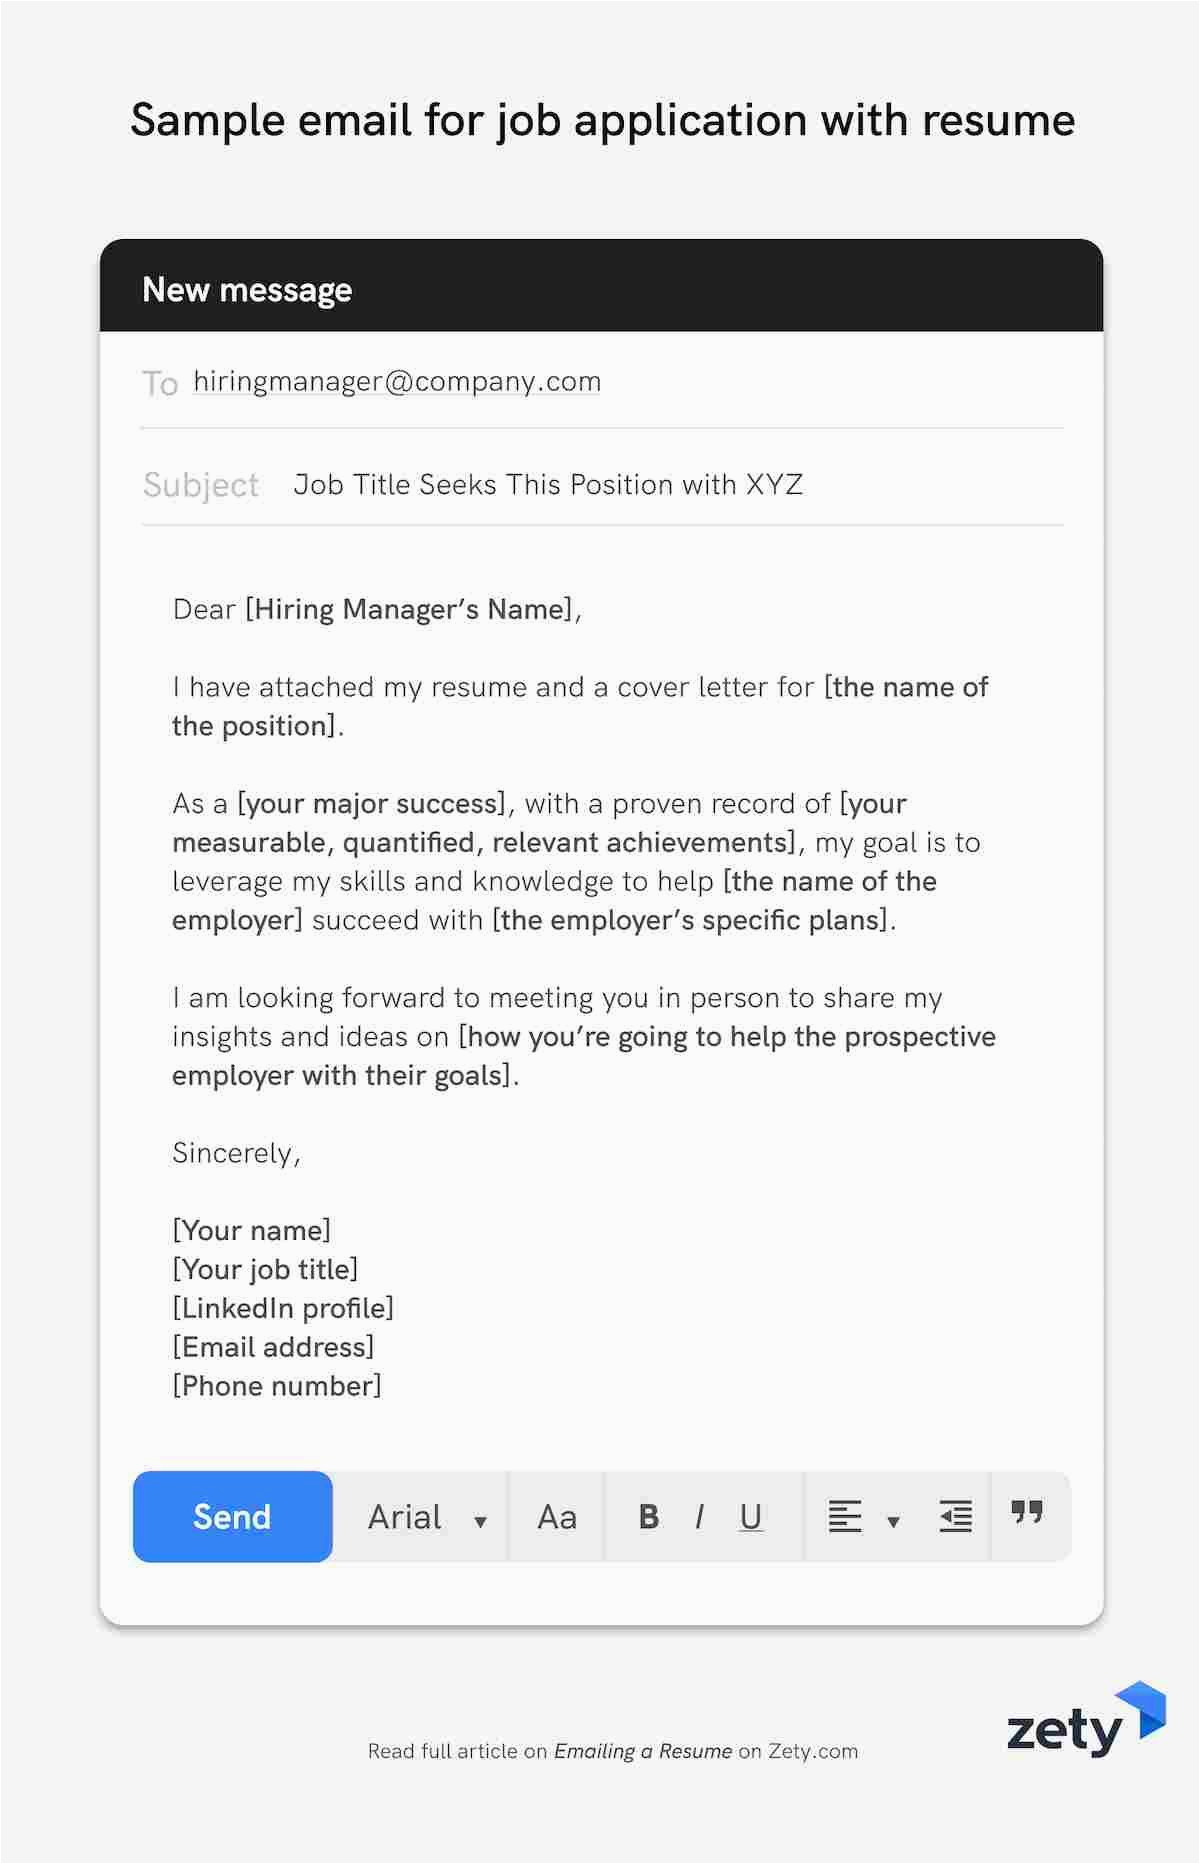 Email Body for Sending Resume Sample Emailing A Resume 12 Job Application Email Samples